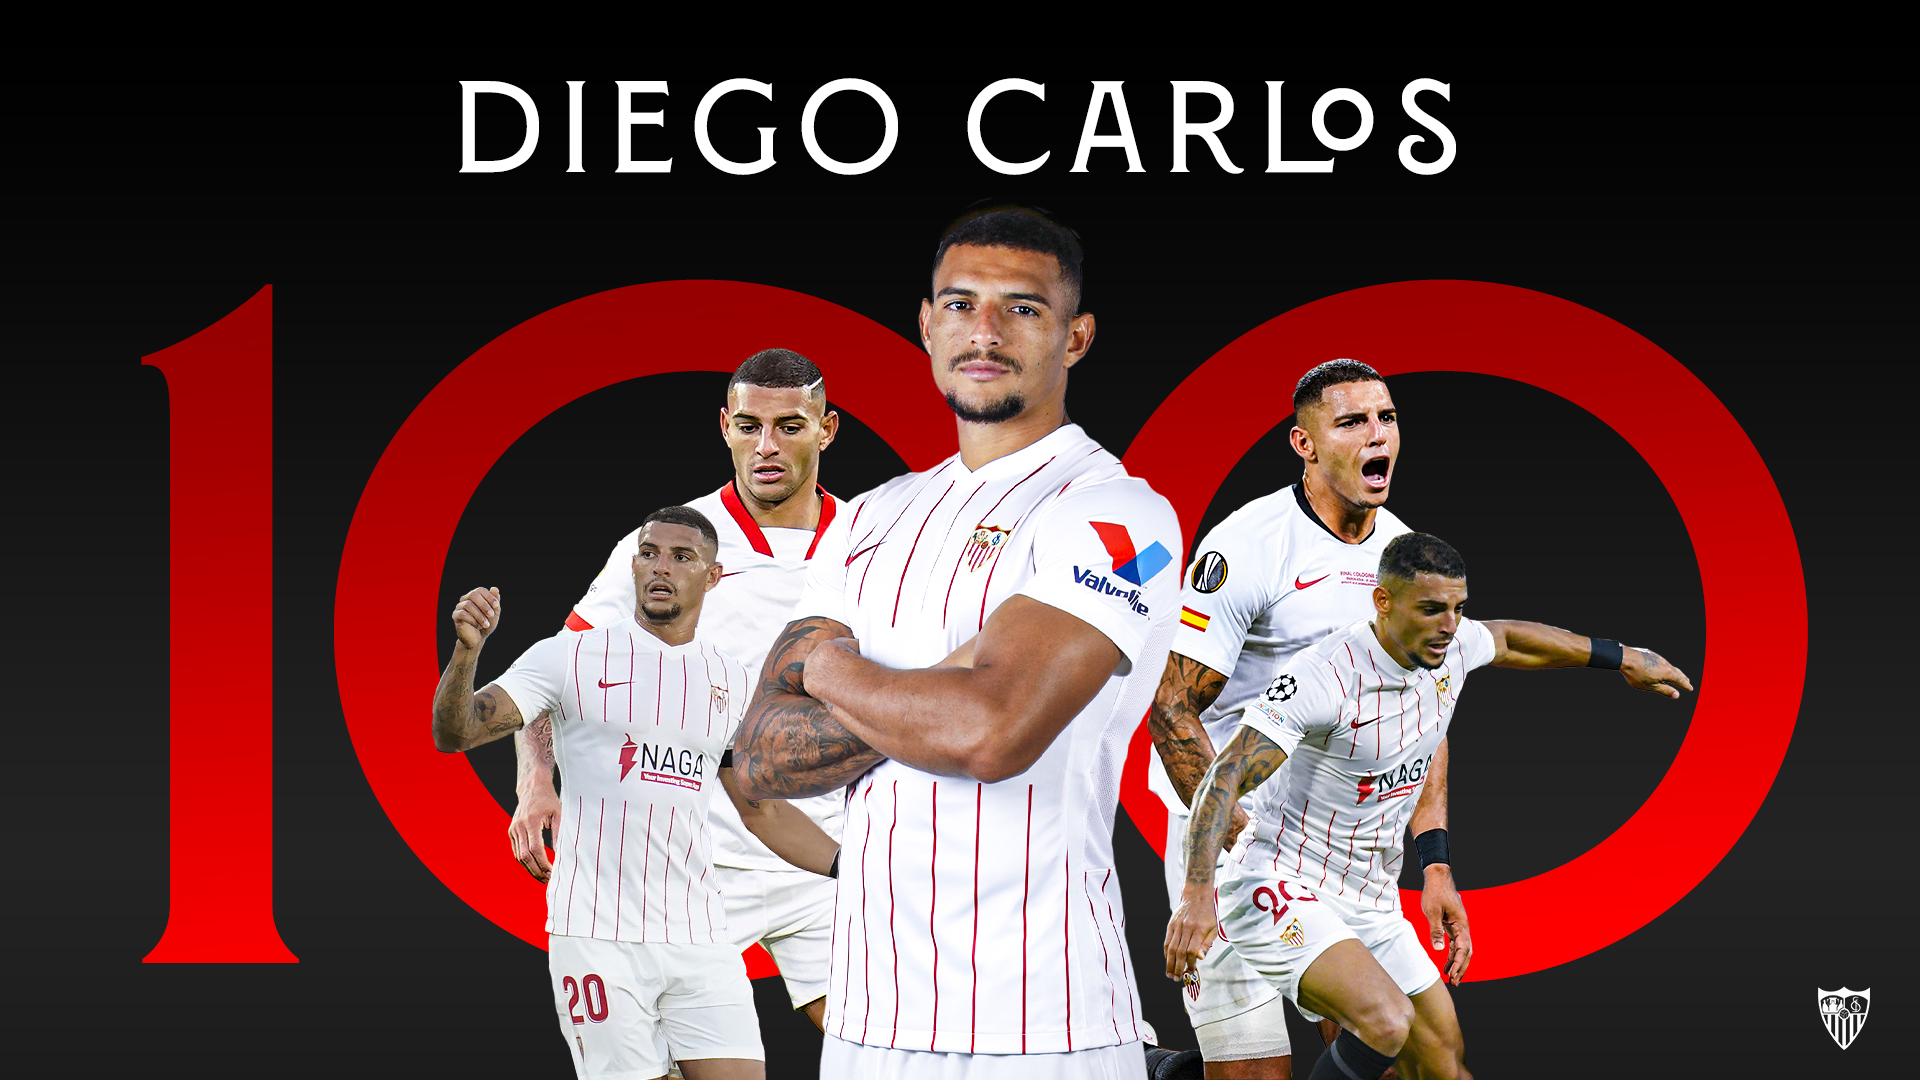 Diego Carlos reaches 100 games for Sevilla 